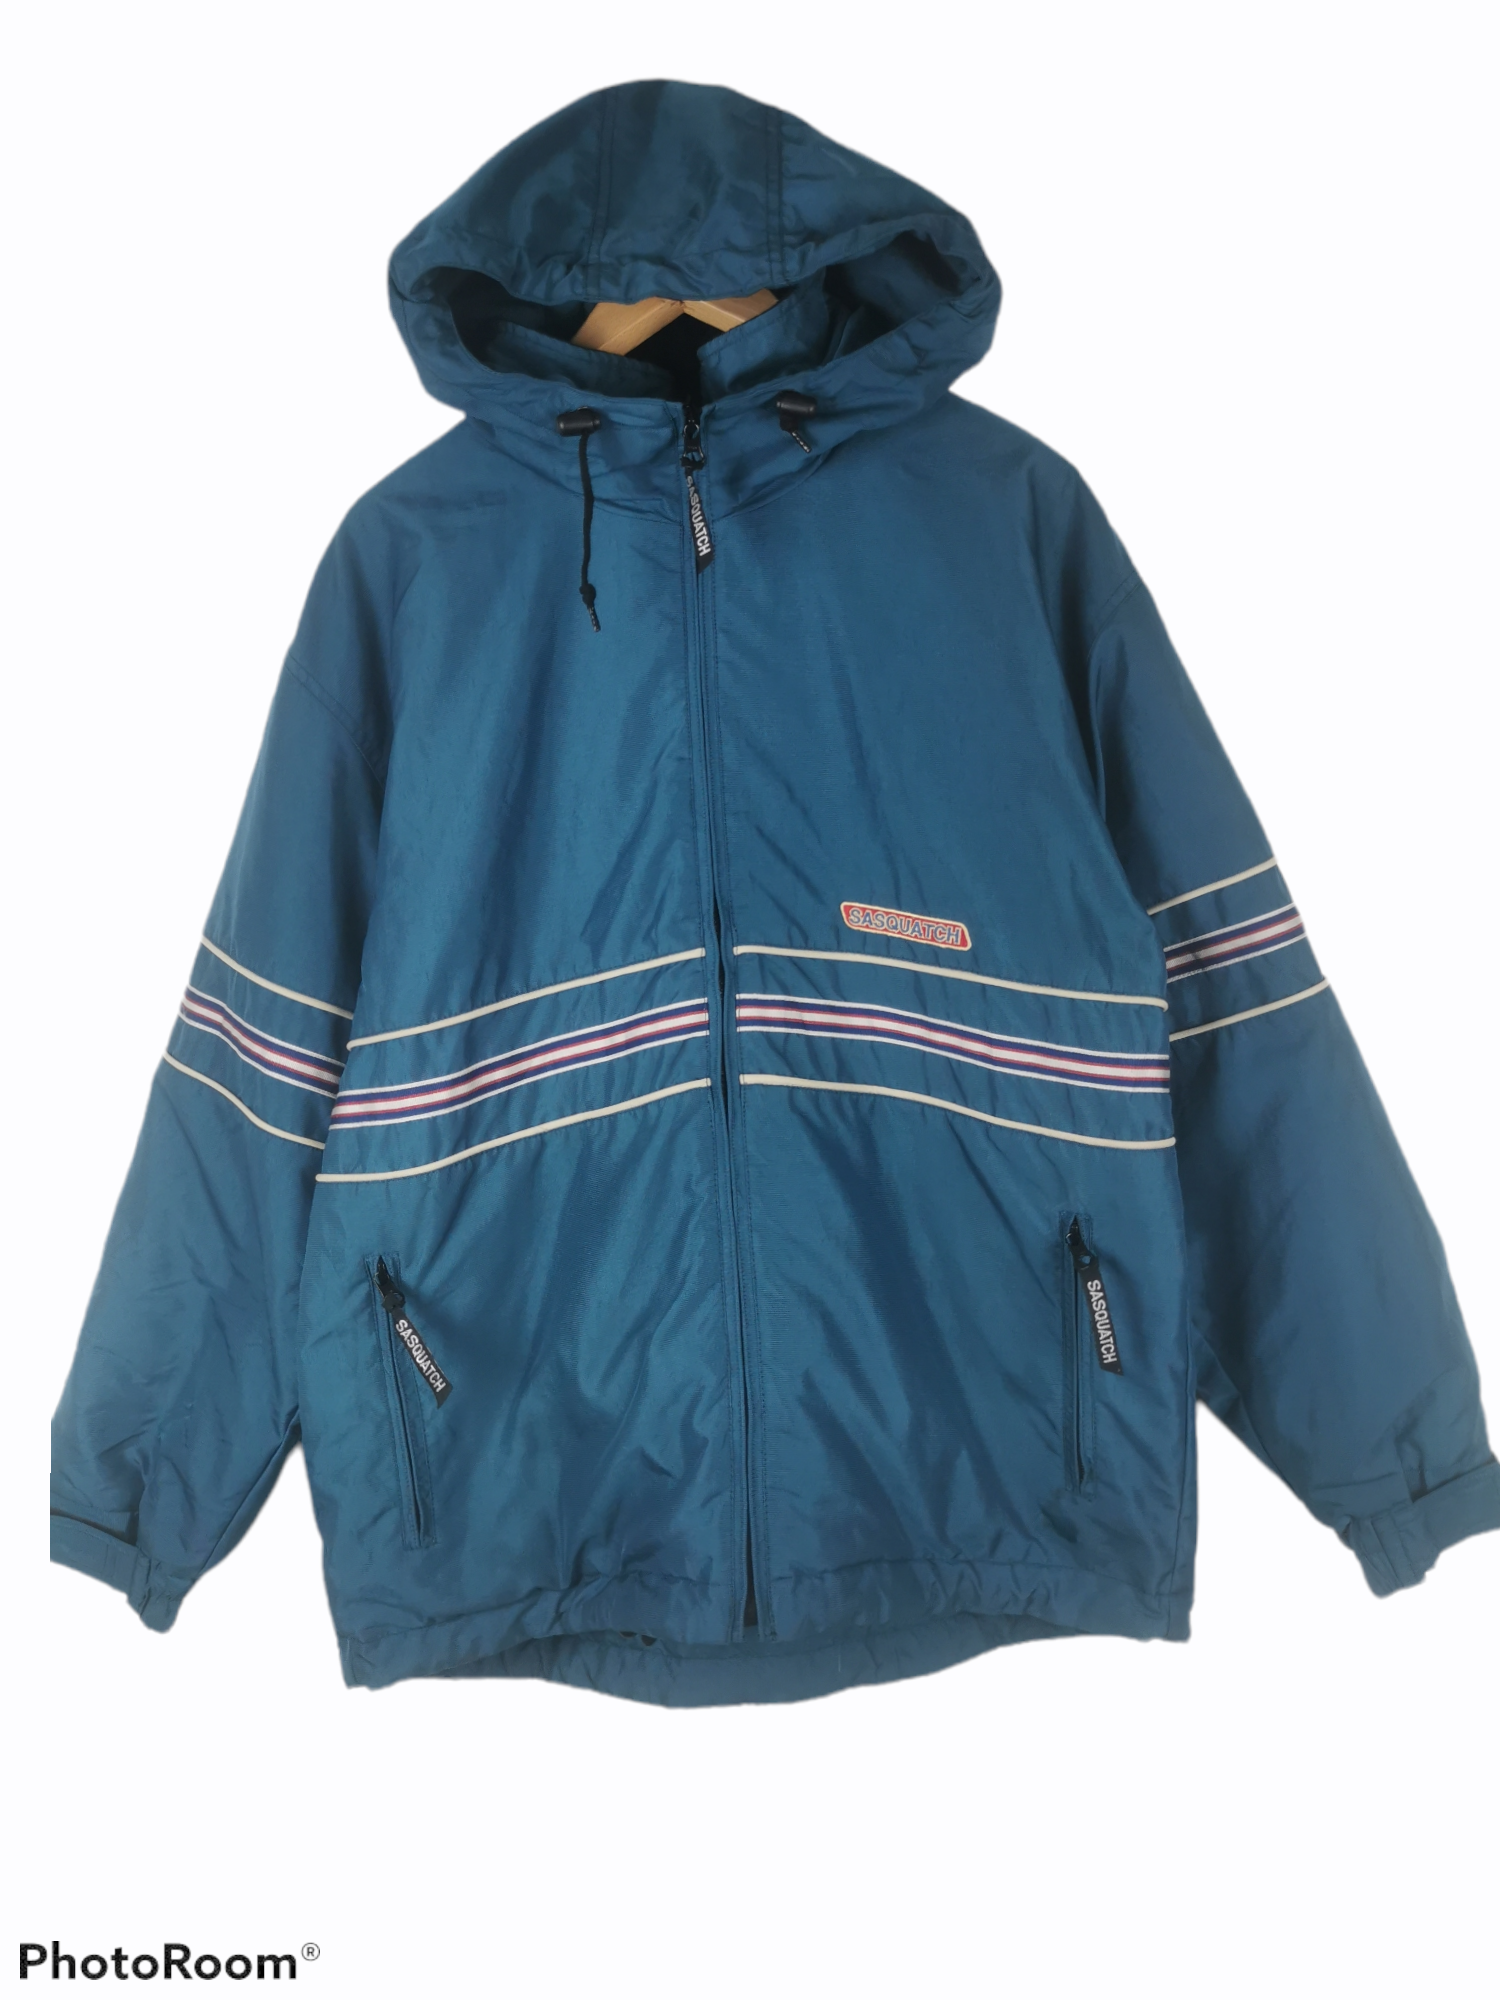 Sasquatch Hoodie Jacket Size M Oversize - 1